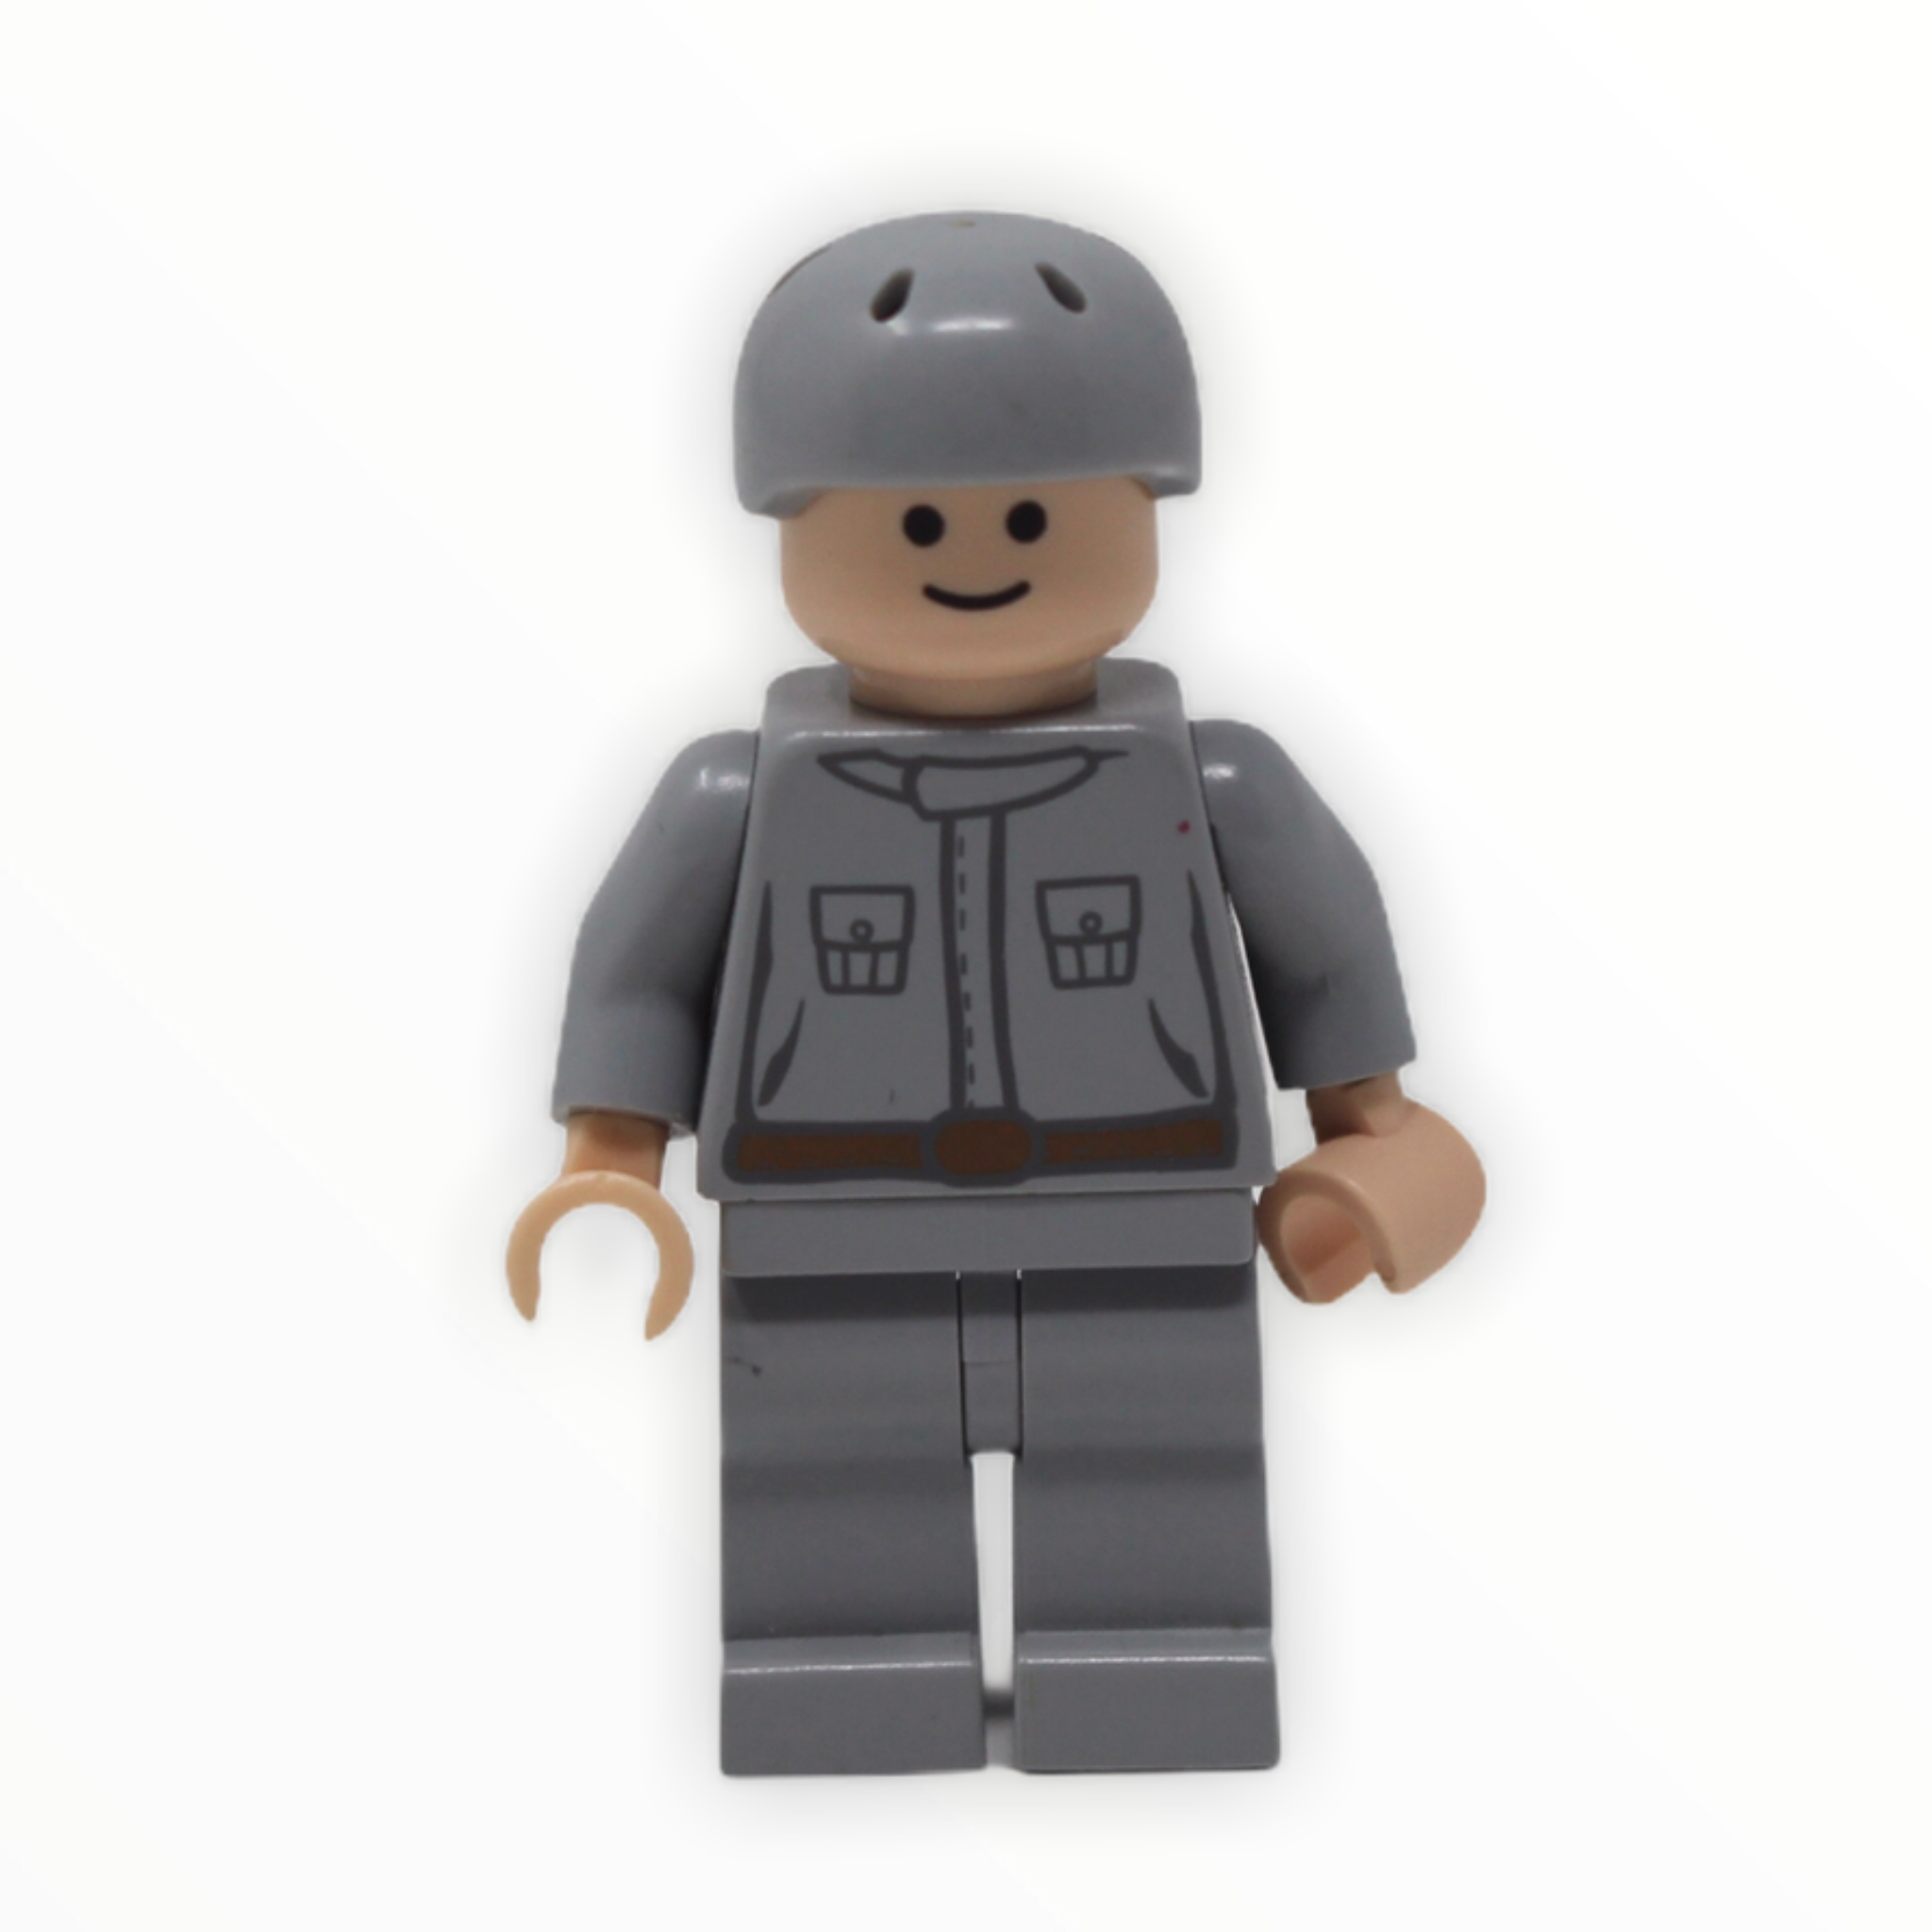 Rebel Technician (light bluish gray uniform)